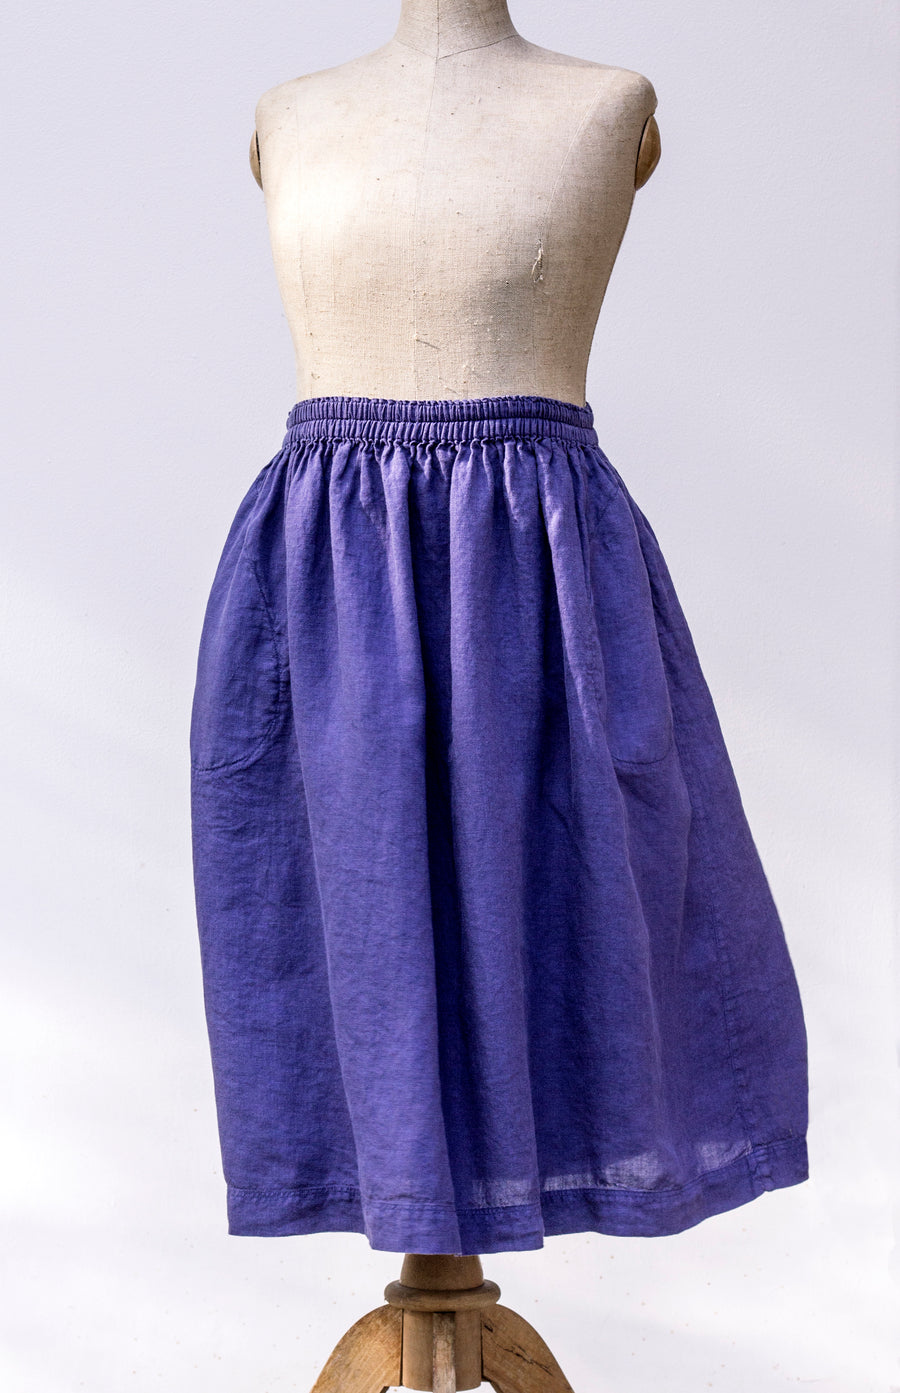 Extra soft ZEN skirt in Orient Blue shade